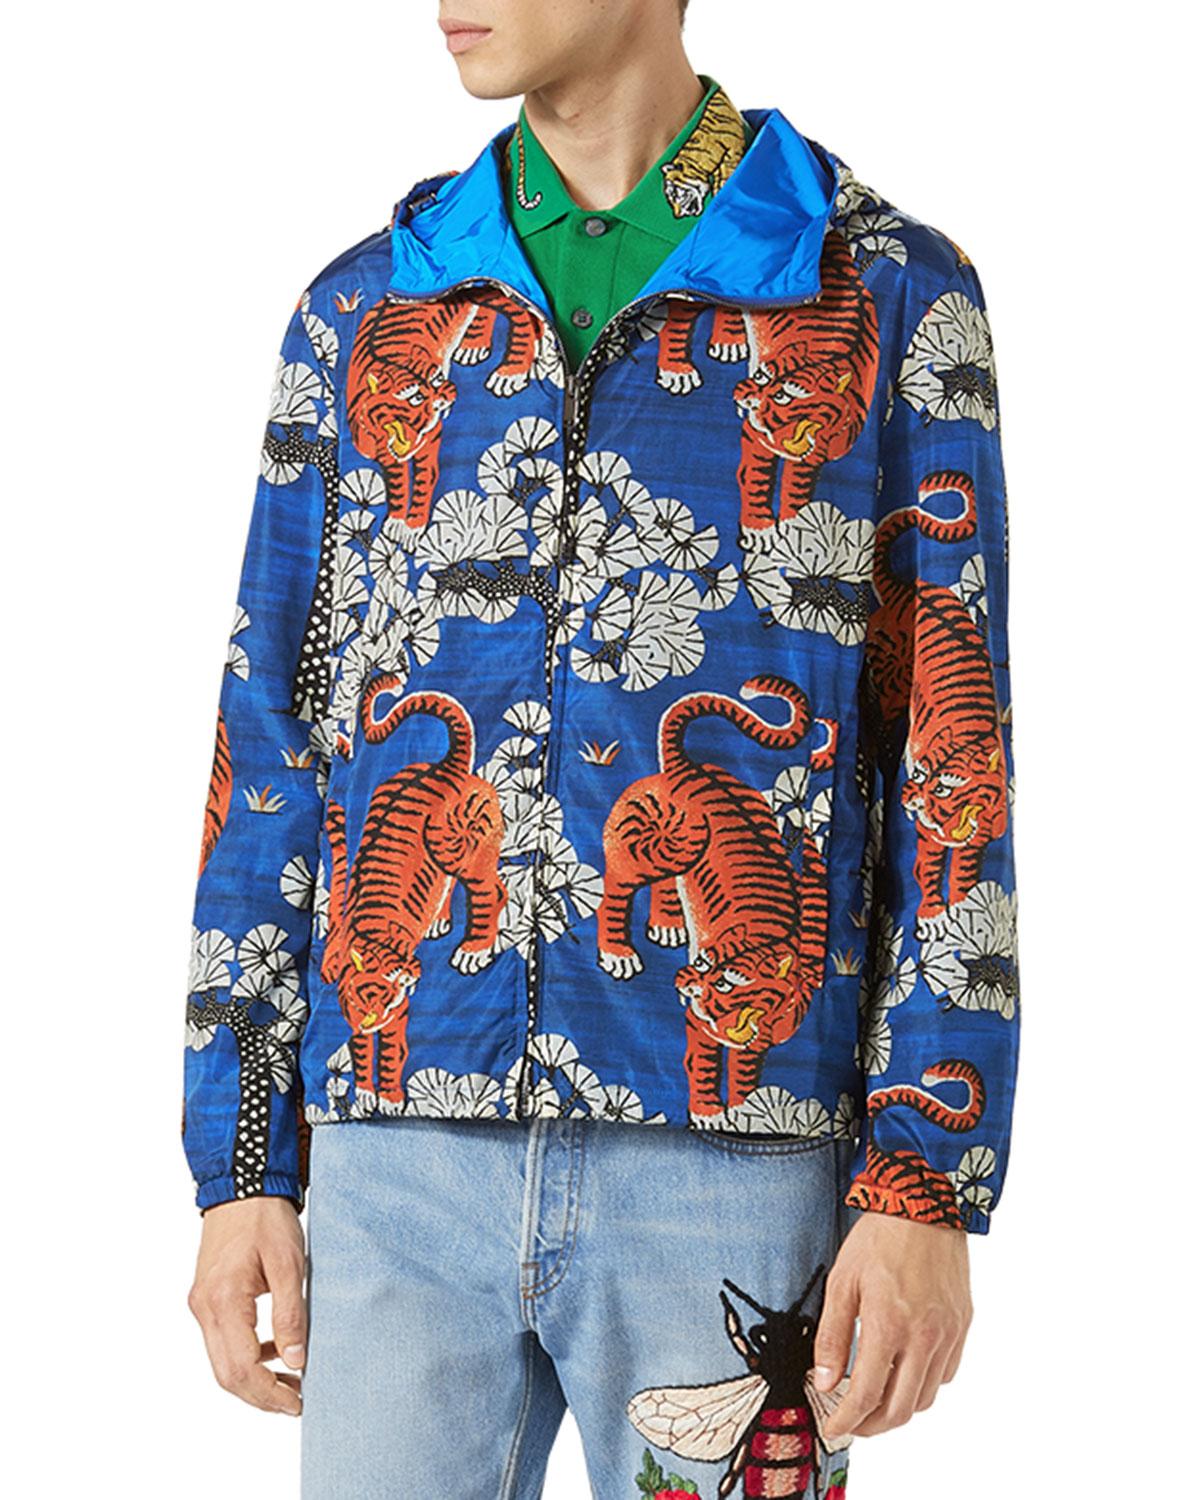 gucci jacket bengal tiger